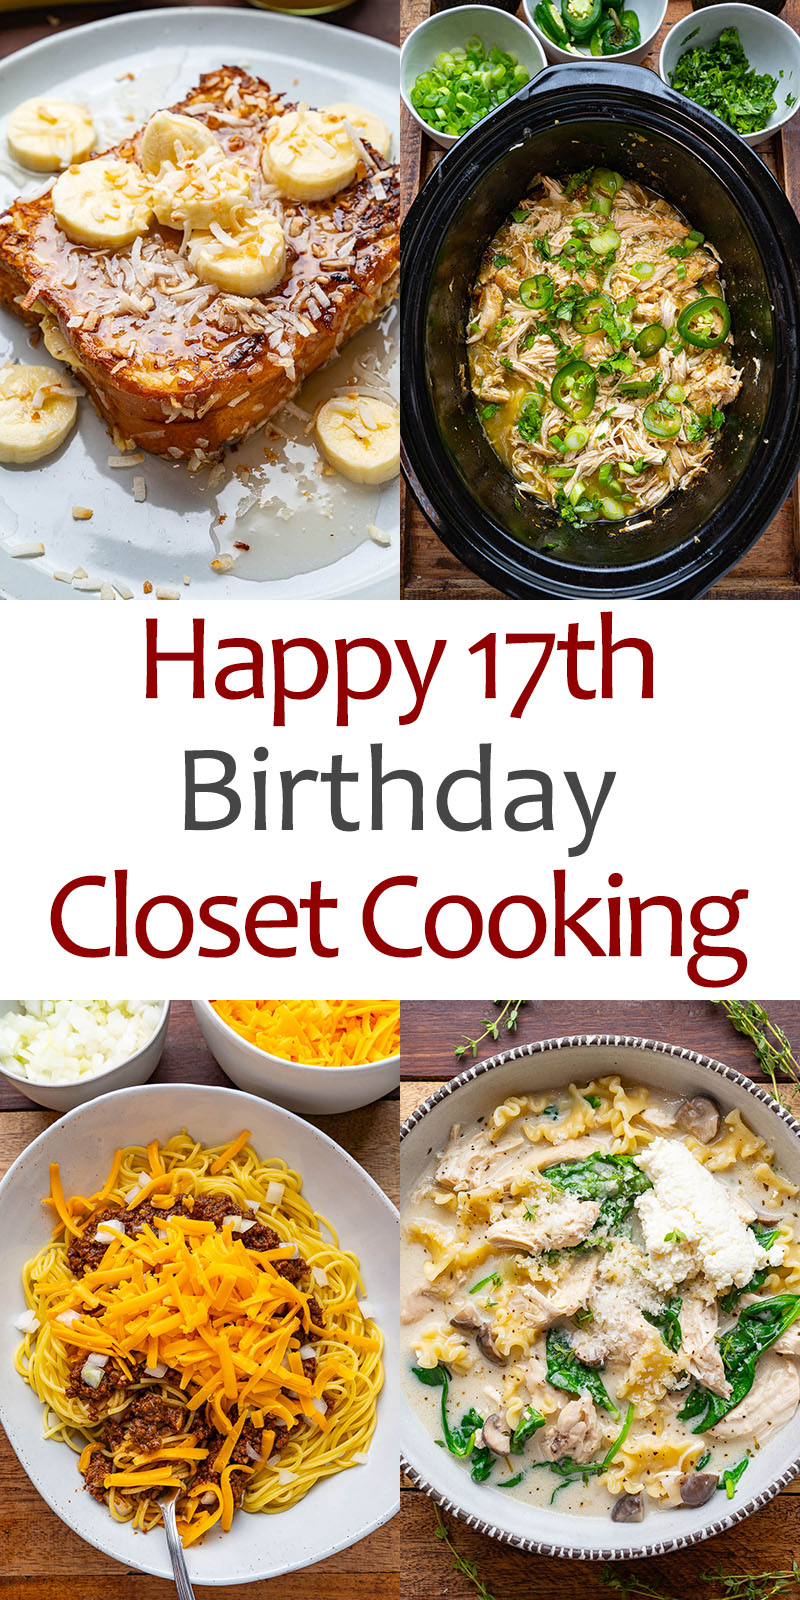 Happy 17th Birthday Closet Cooking!